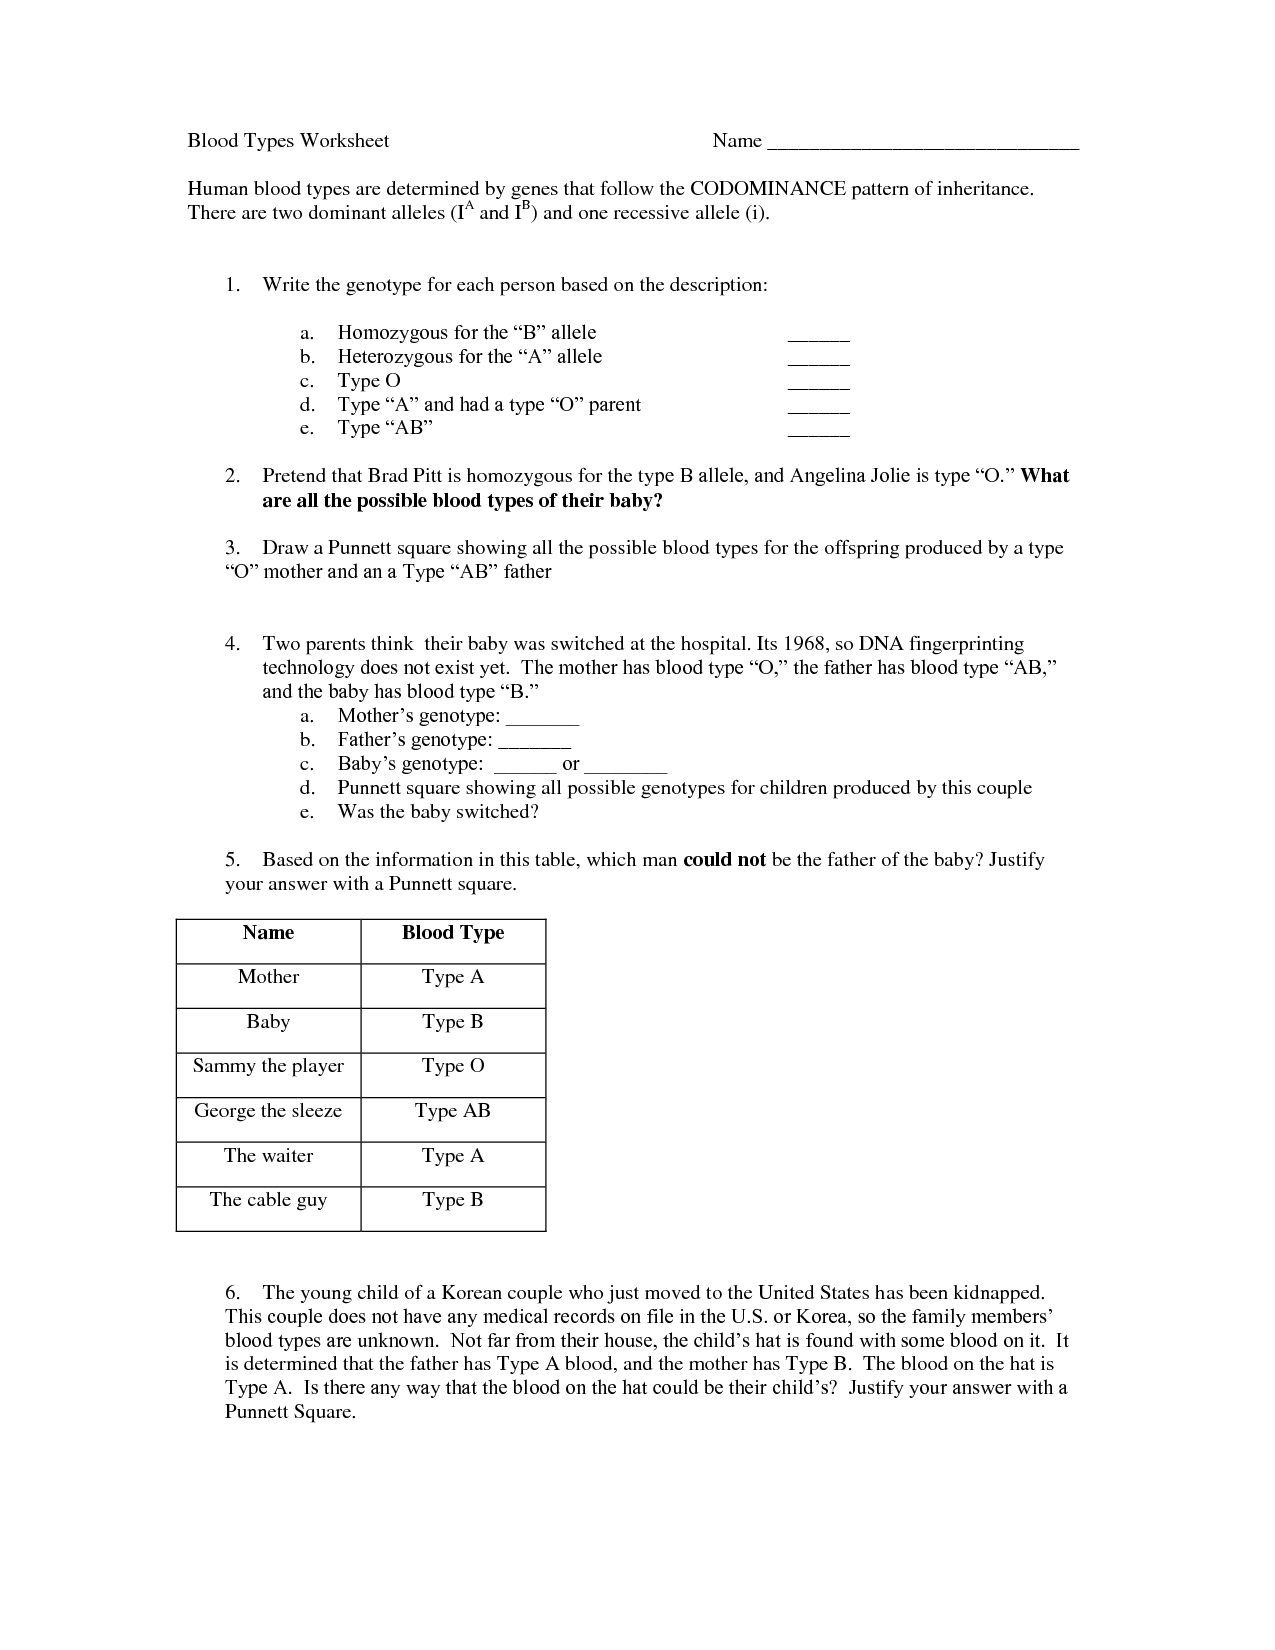 Blood Type Codominance Worksheet Answers Image